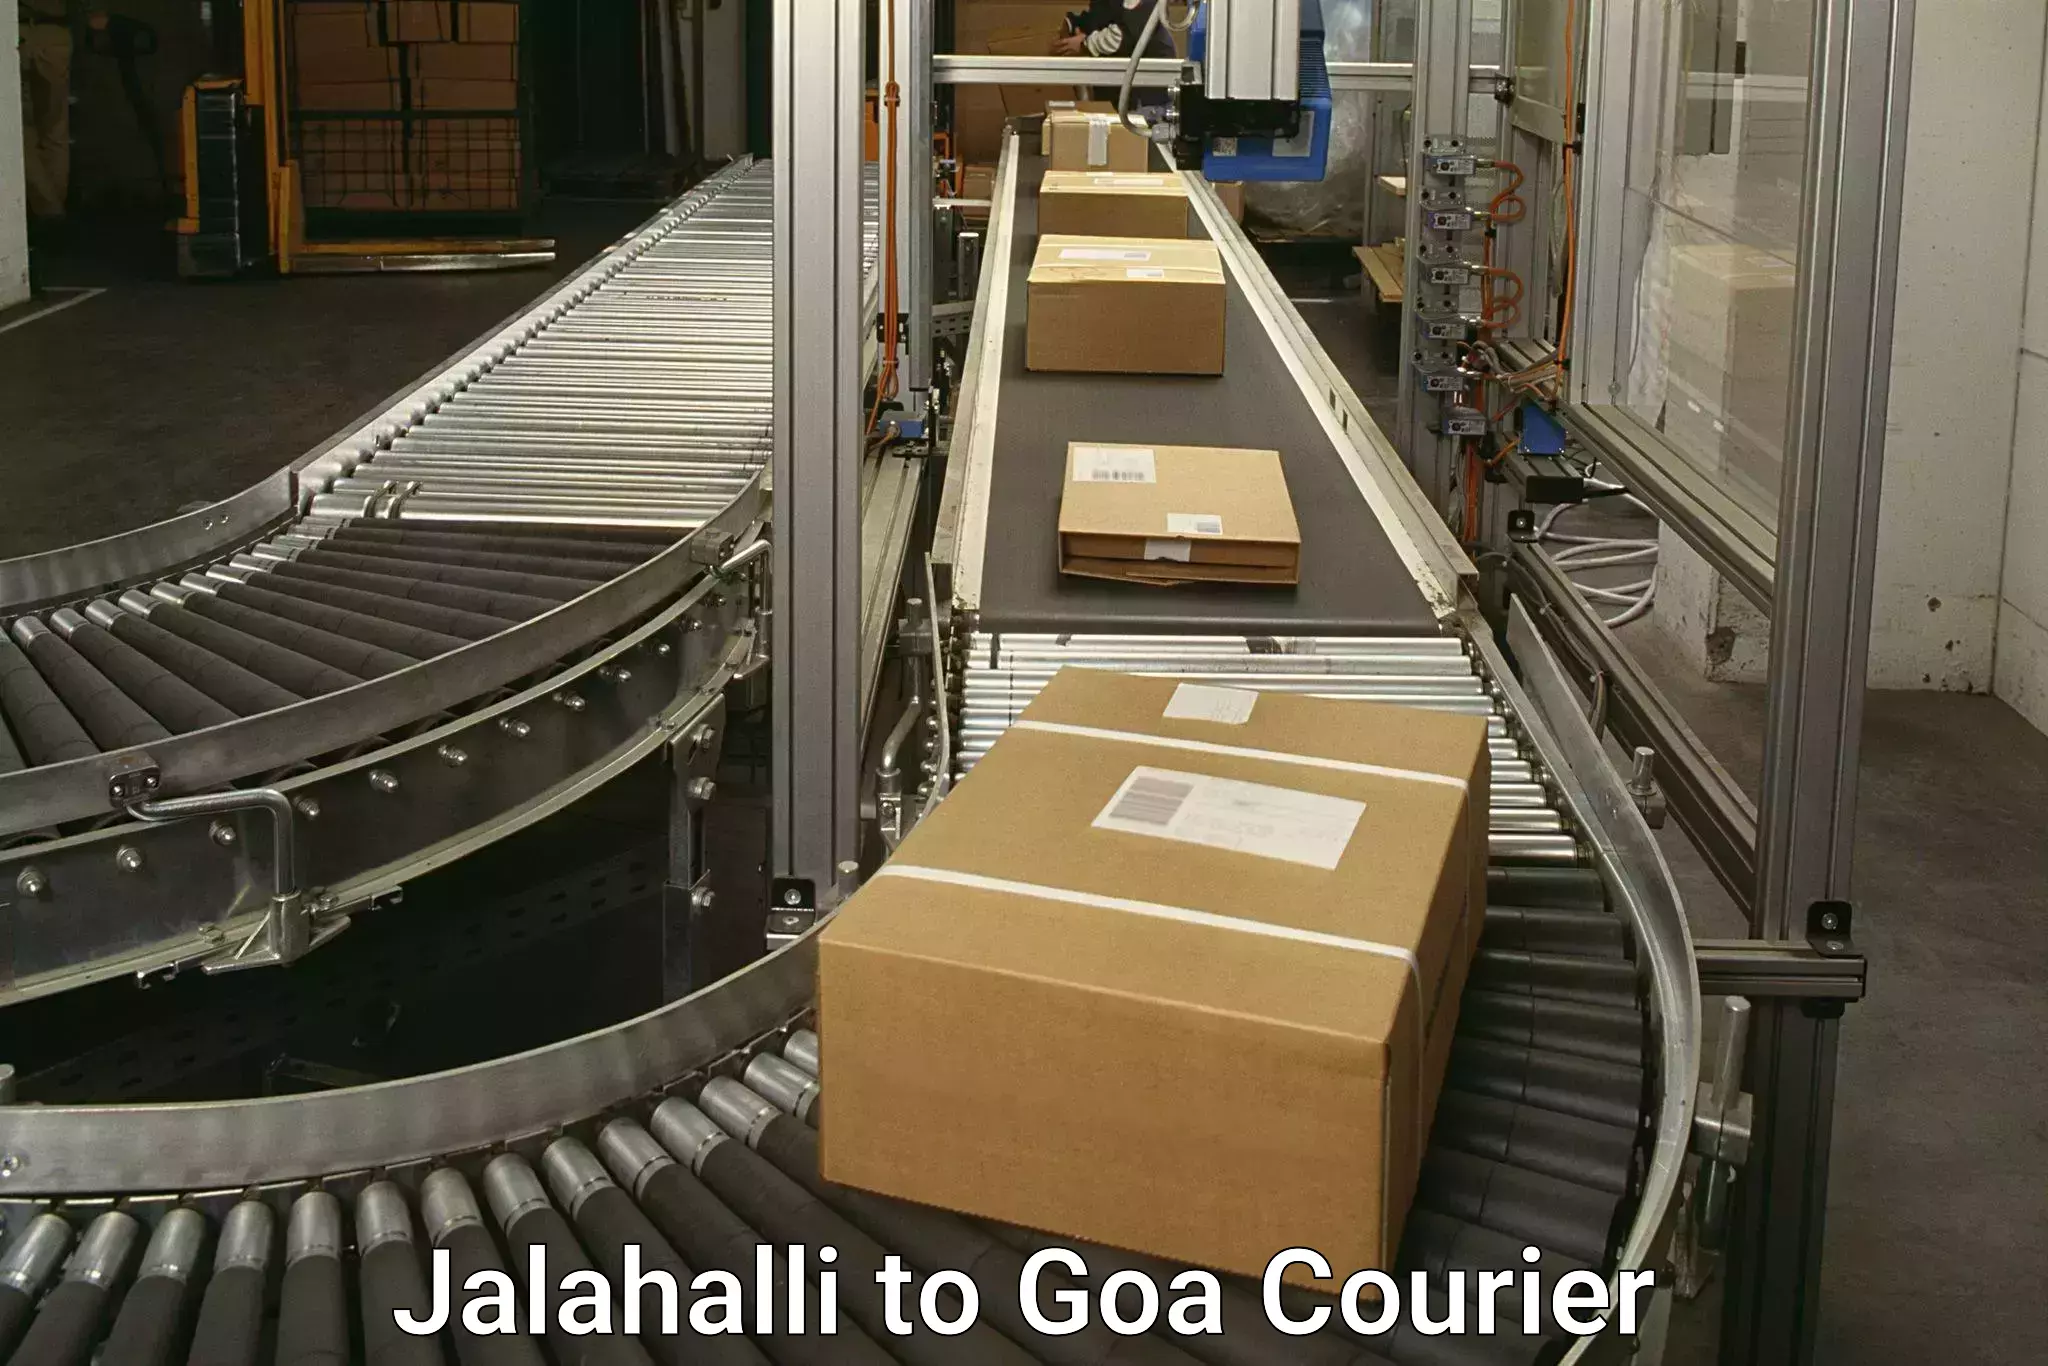 Express delivery network Jalahalli to Vasco da Gama